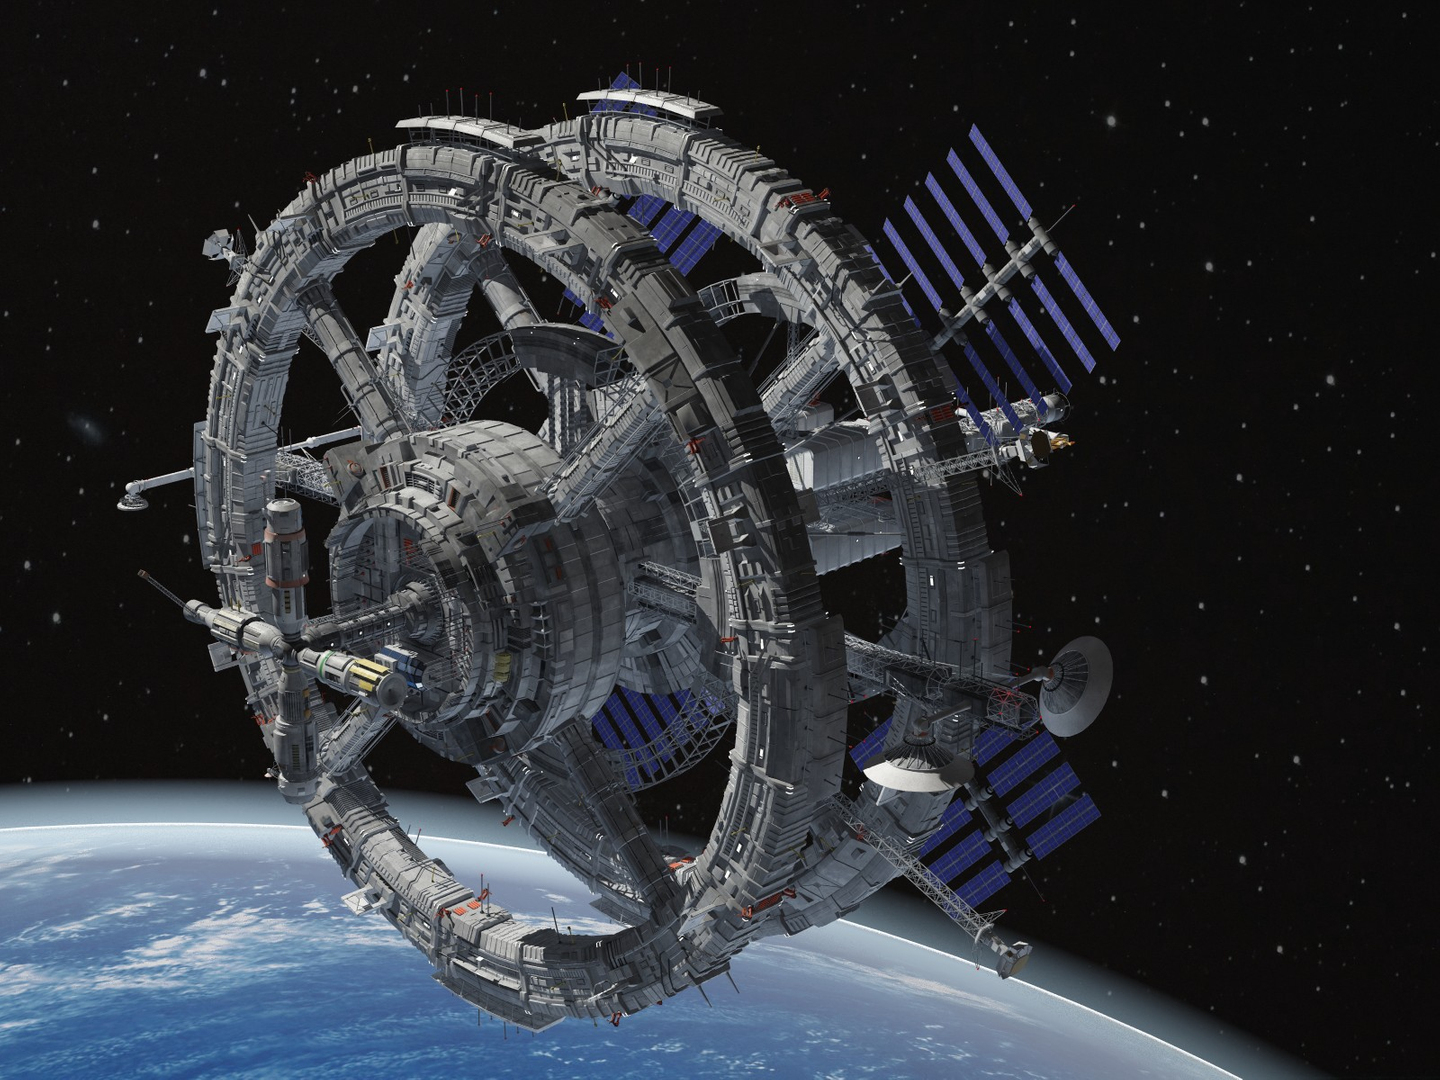 Sci-Fi Космическая станция 3d. Космические корабли и орбитальные станции. Орбитальная Космическая станция. Космические станции будущего. Sci fi space